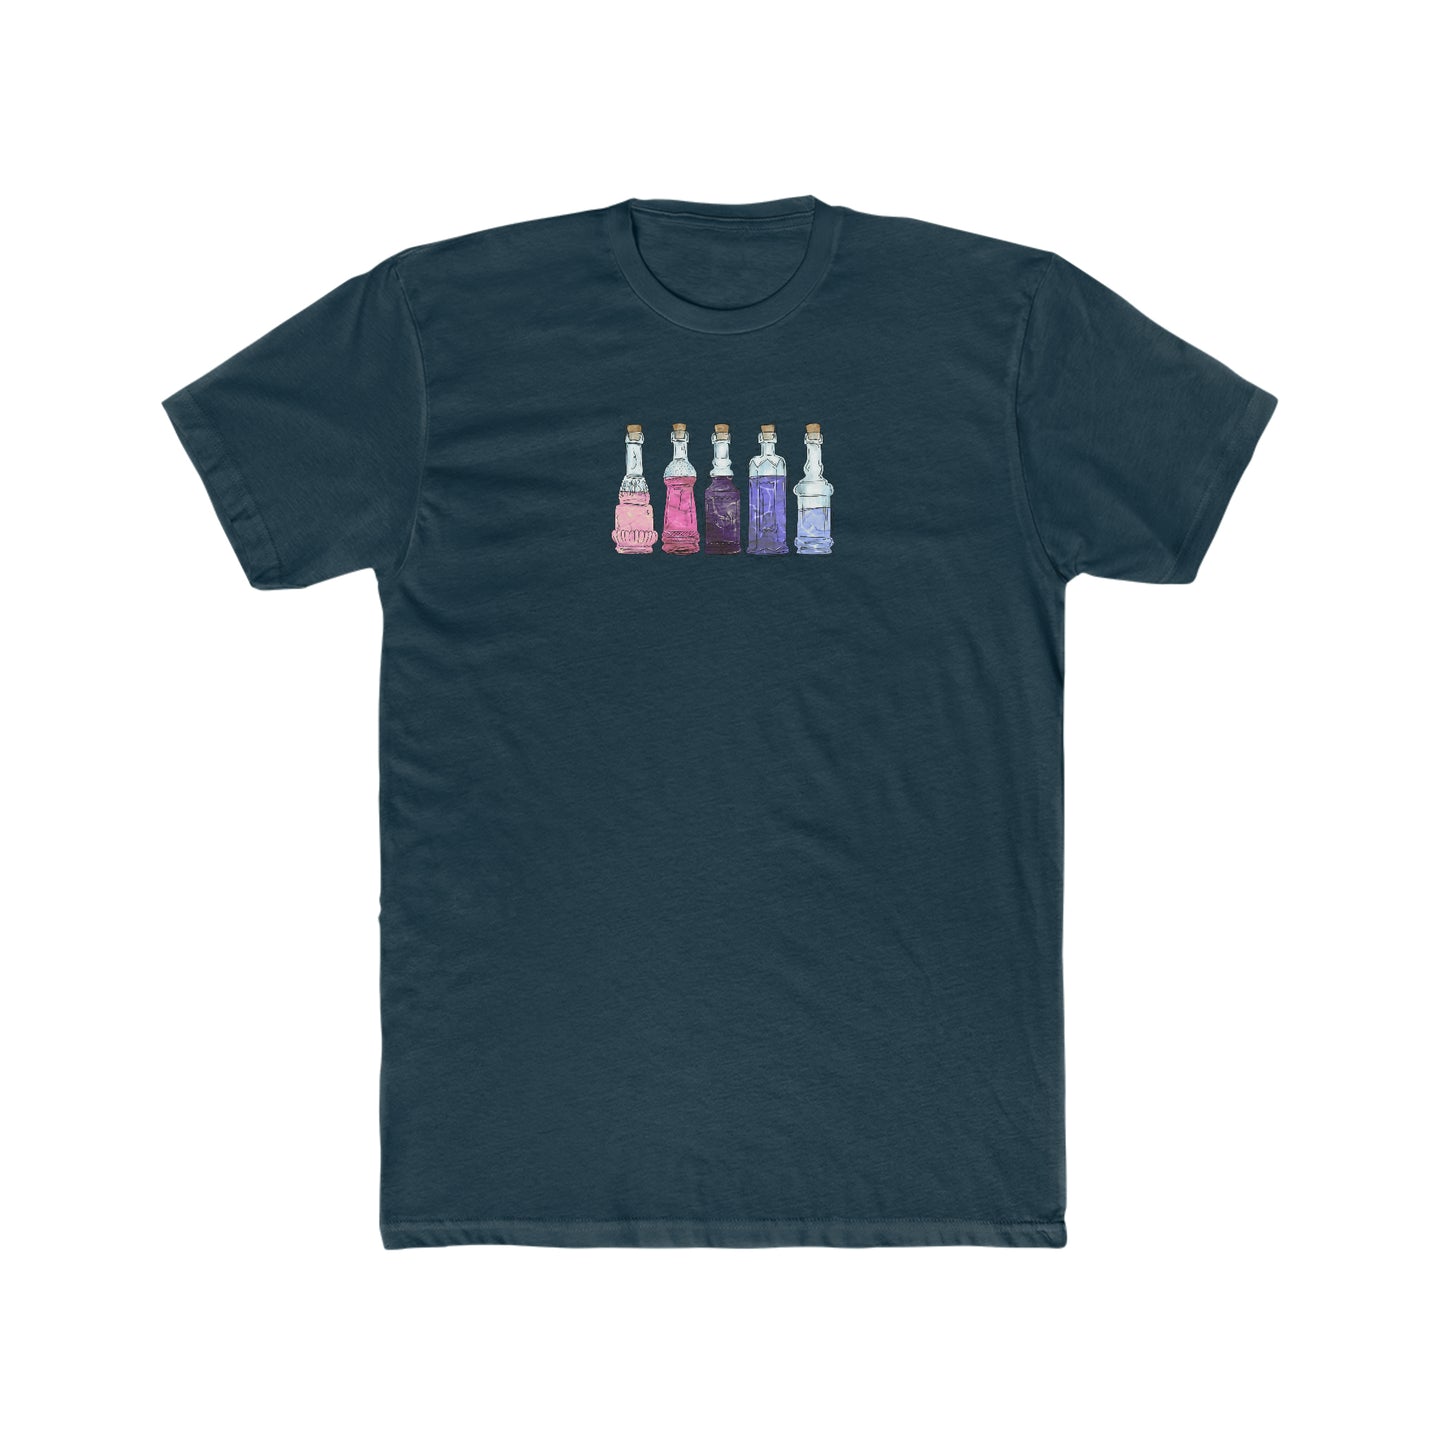 Omnisexual Pride Potion Bottles - Men's T-Shirt